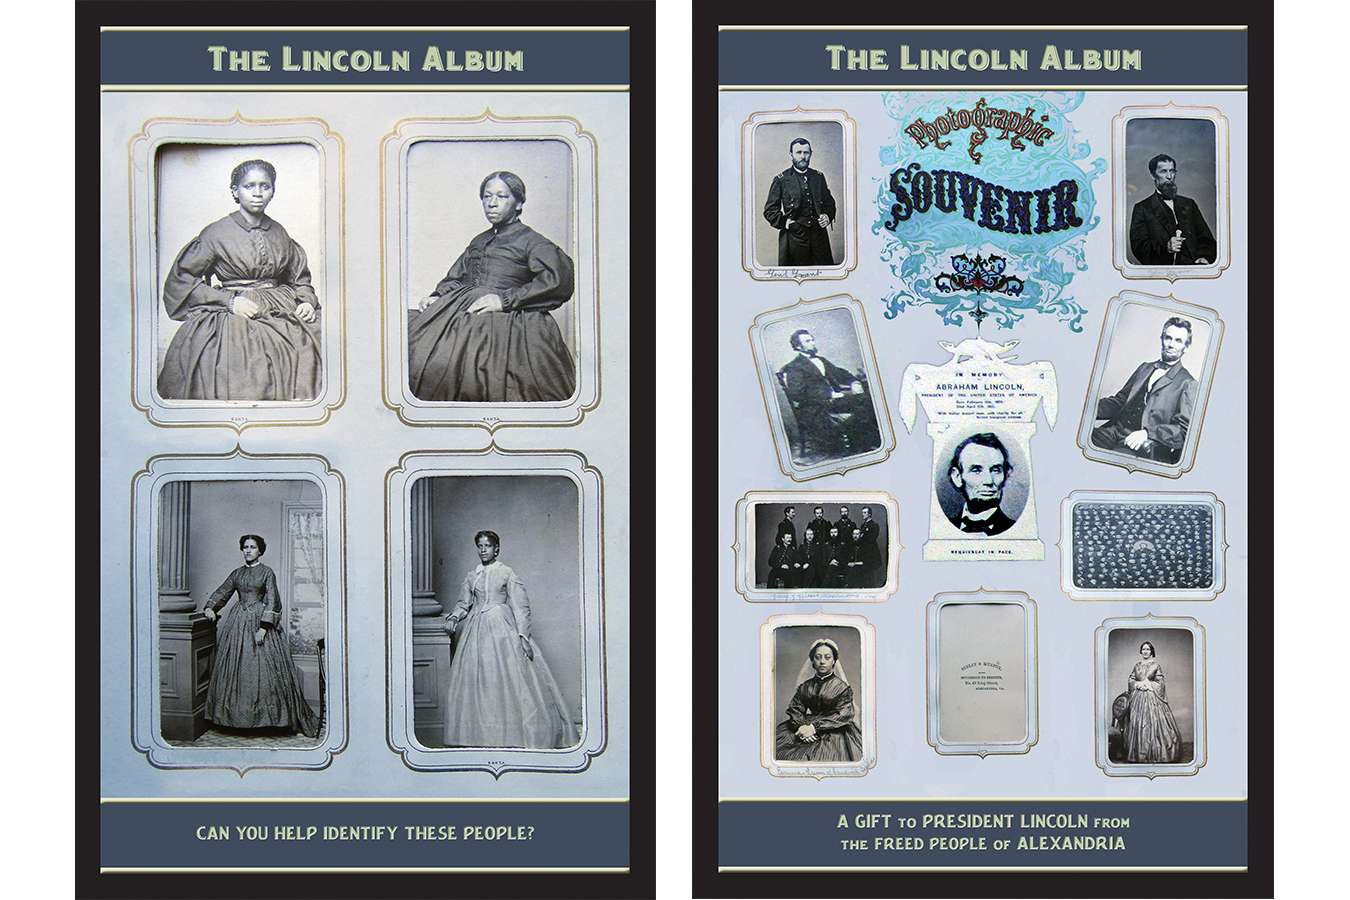 3 Linc Alb : This Lincoln Album contains many pages of souvenir photos, and Cartes de Visite